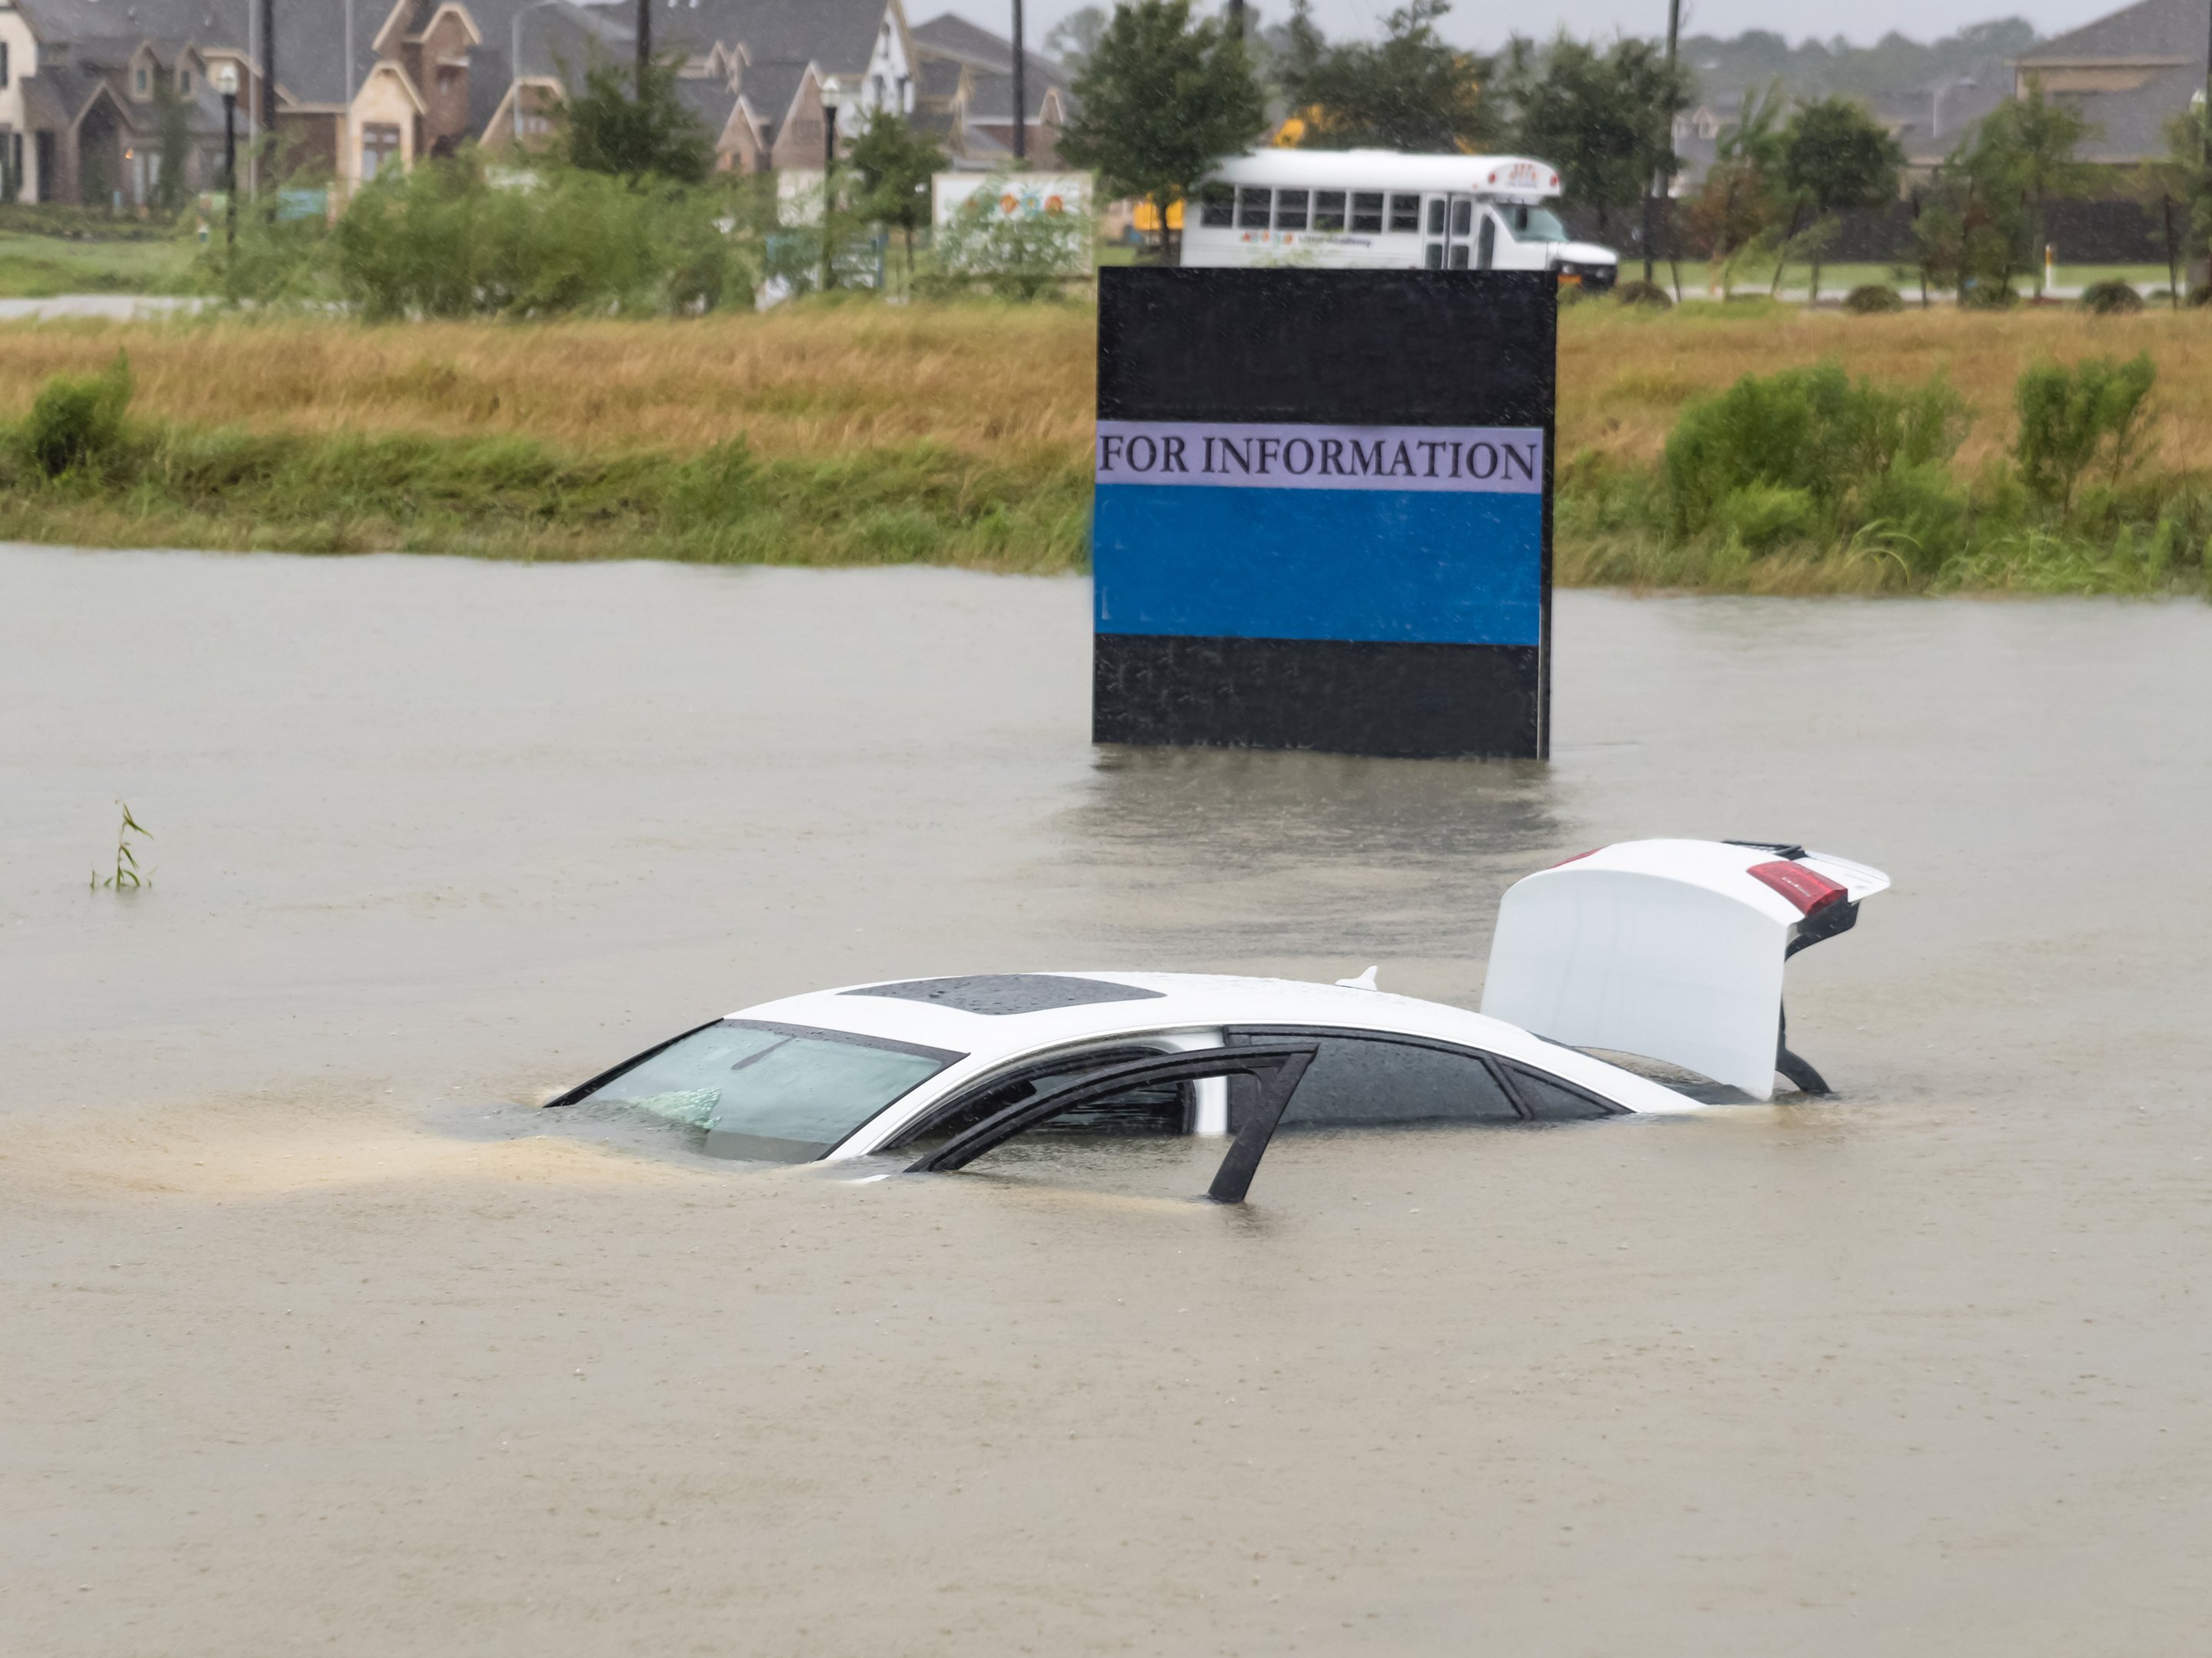 Unwetter, überflutetes Auto - Quelle: trongnguyen stock.adobe.com